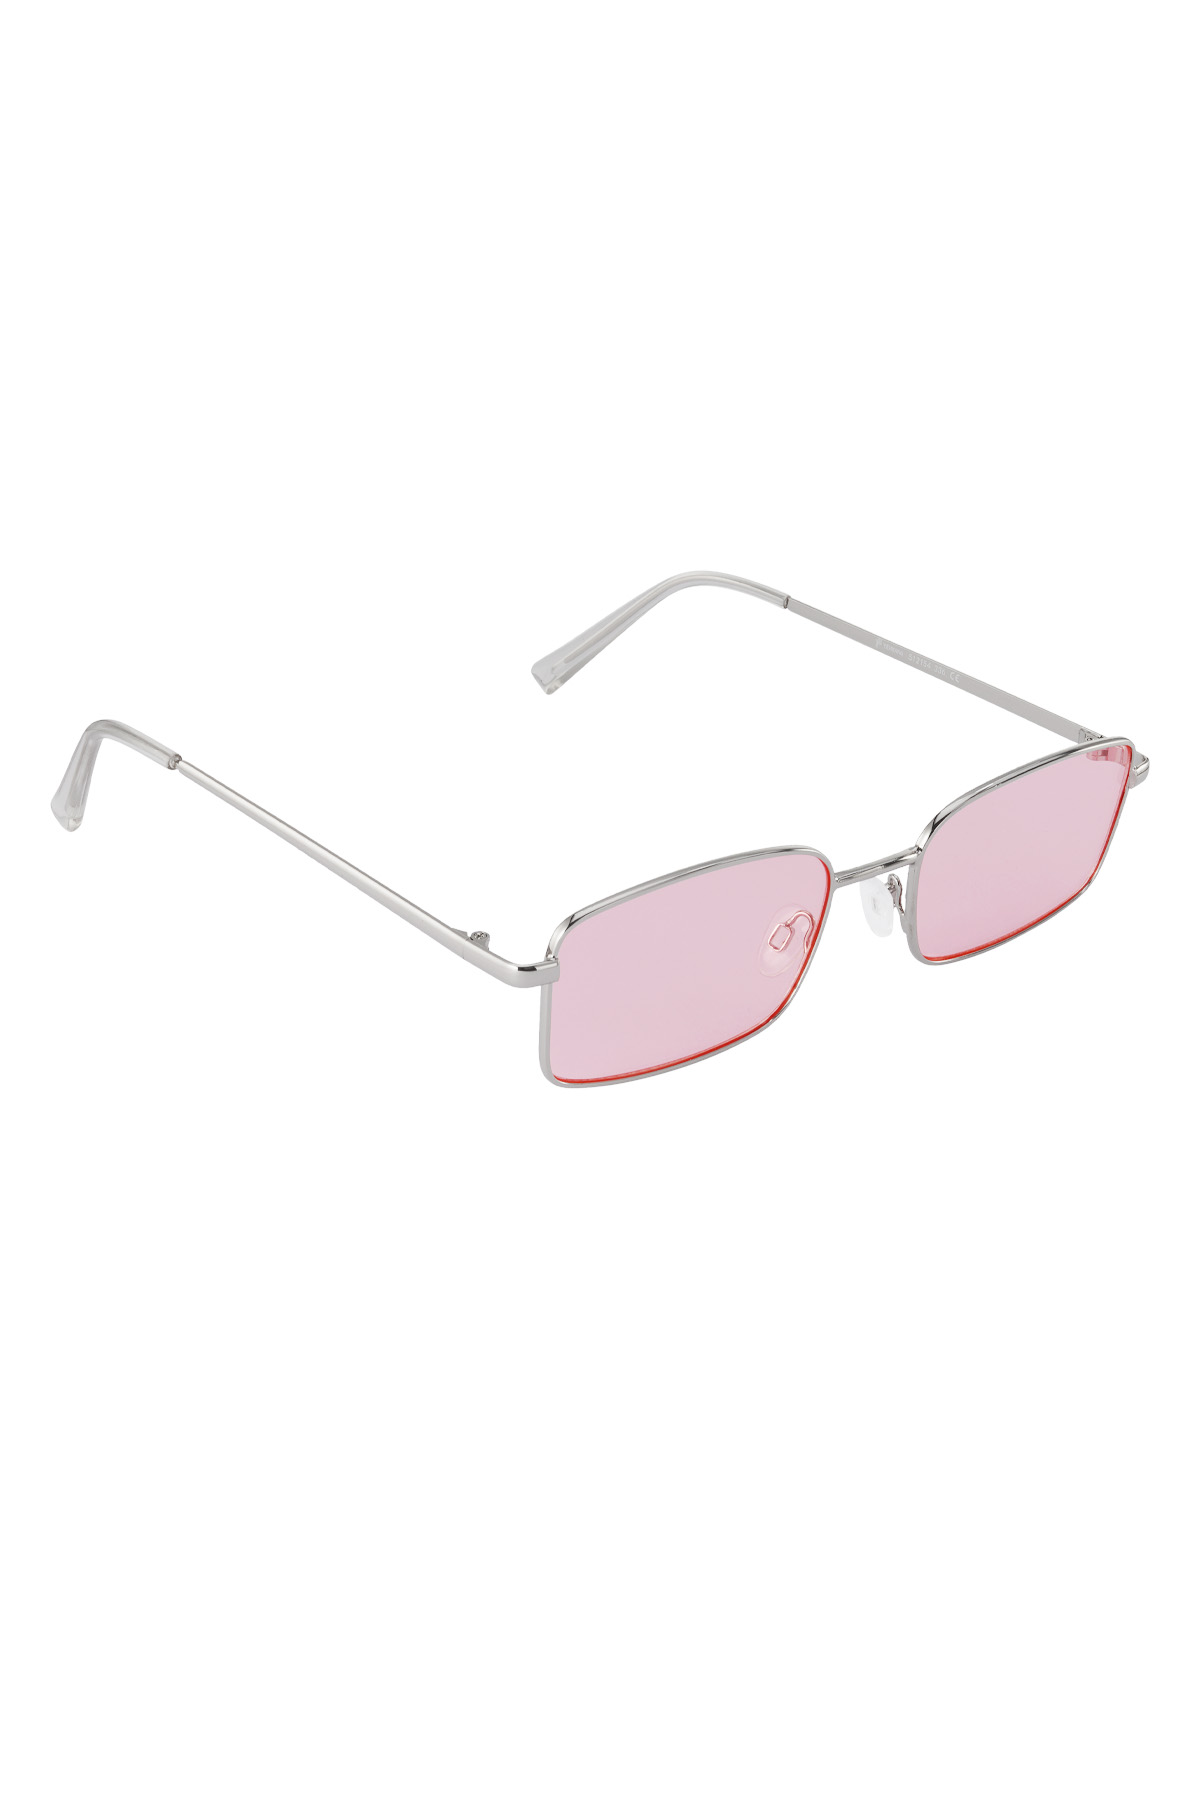 Sonnenbrille strahlender Durchblick - Roségold 